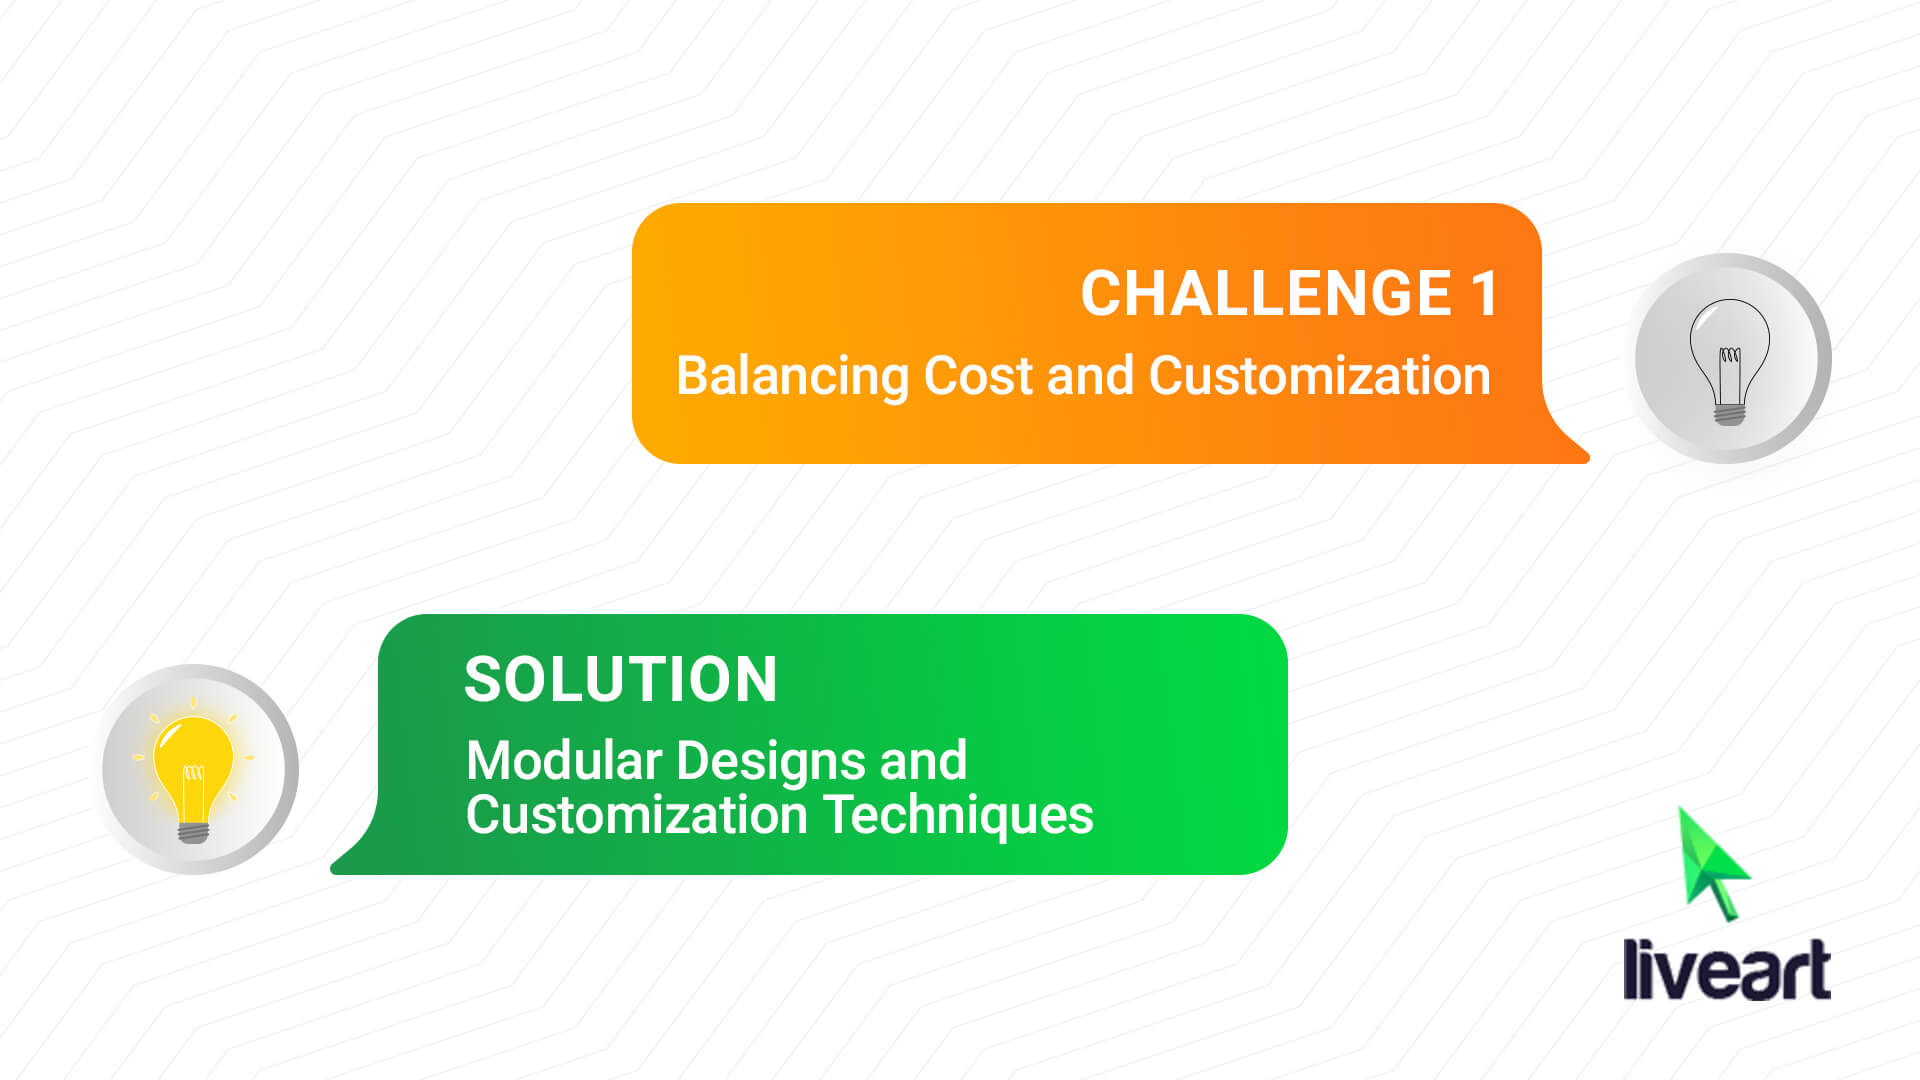 Challenge 1: Balancing Cost and Customization